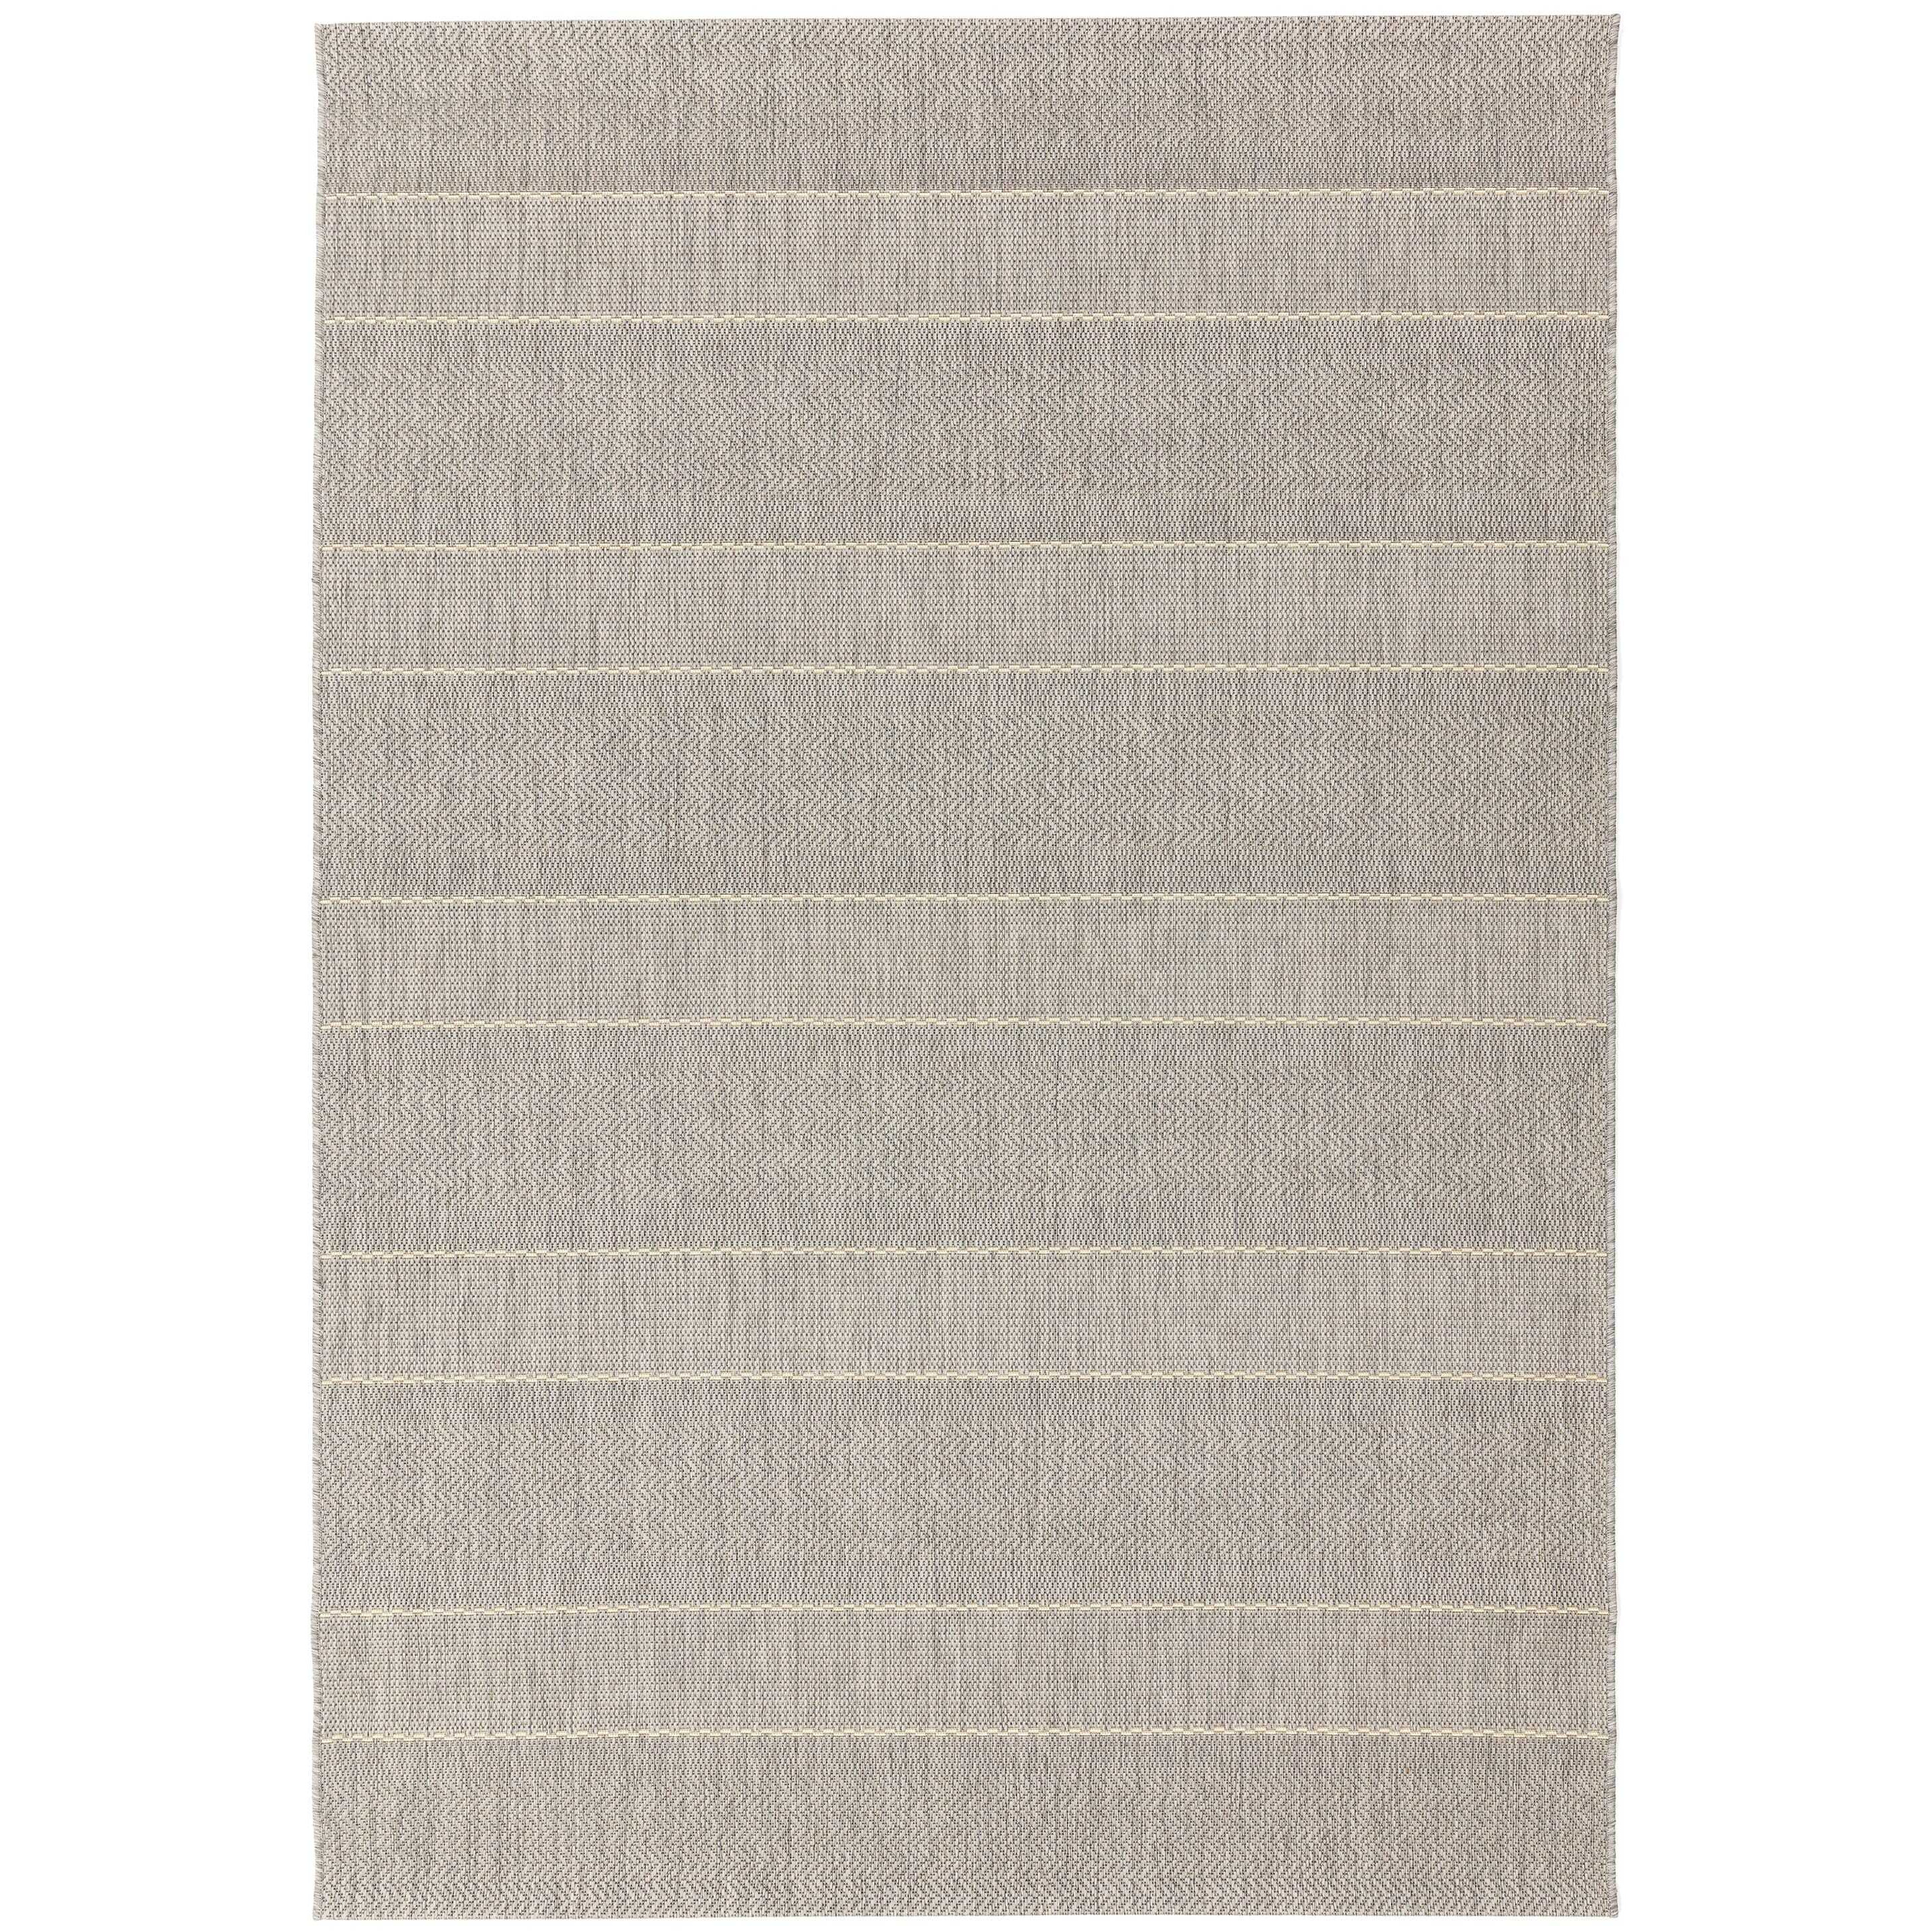 Asiatic Carpets Patio Machine Woven Rug Beige Stripe - 160 x 230cm - image 1